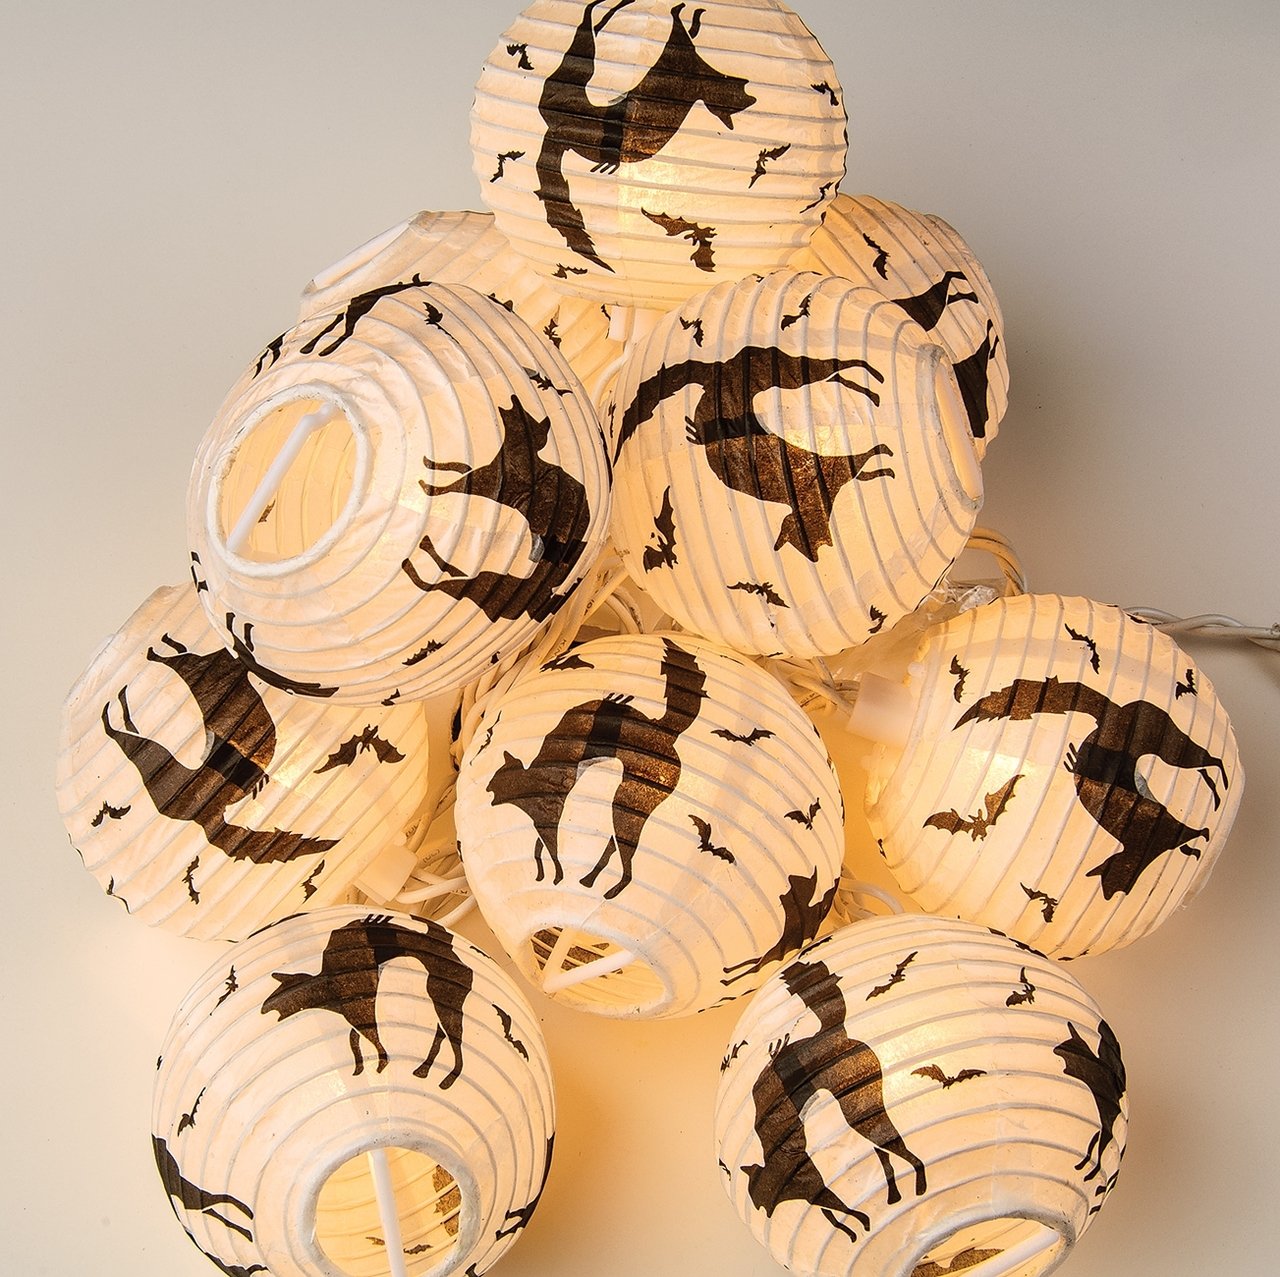 Bats and Cats Paper Lantern String Lights - PaperLanternStore.com - Paper Lanterns, Decor, Party Lights & More